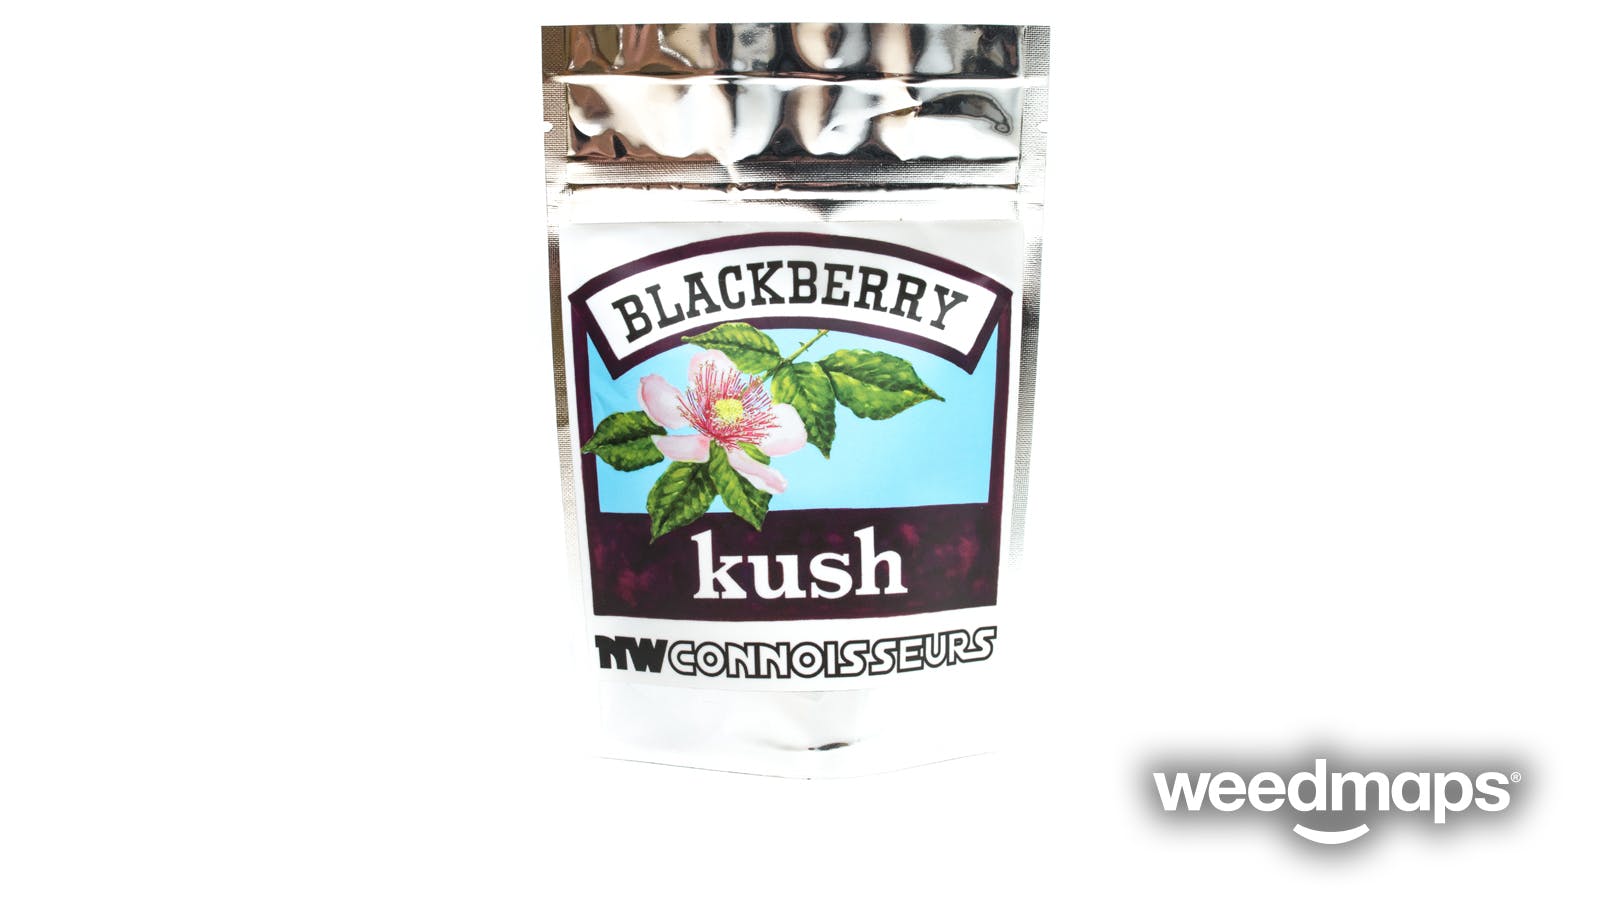 indica-nw-connoisseurs-blackberry-kush